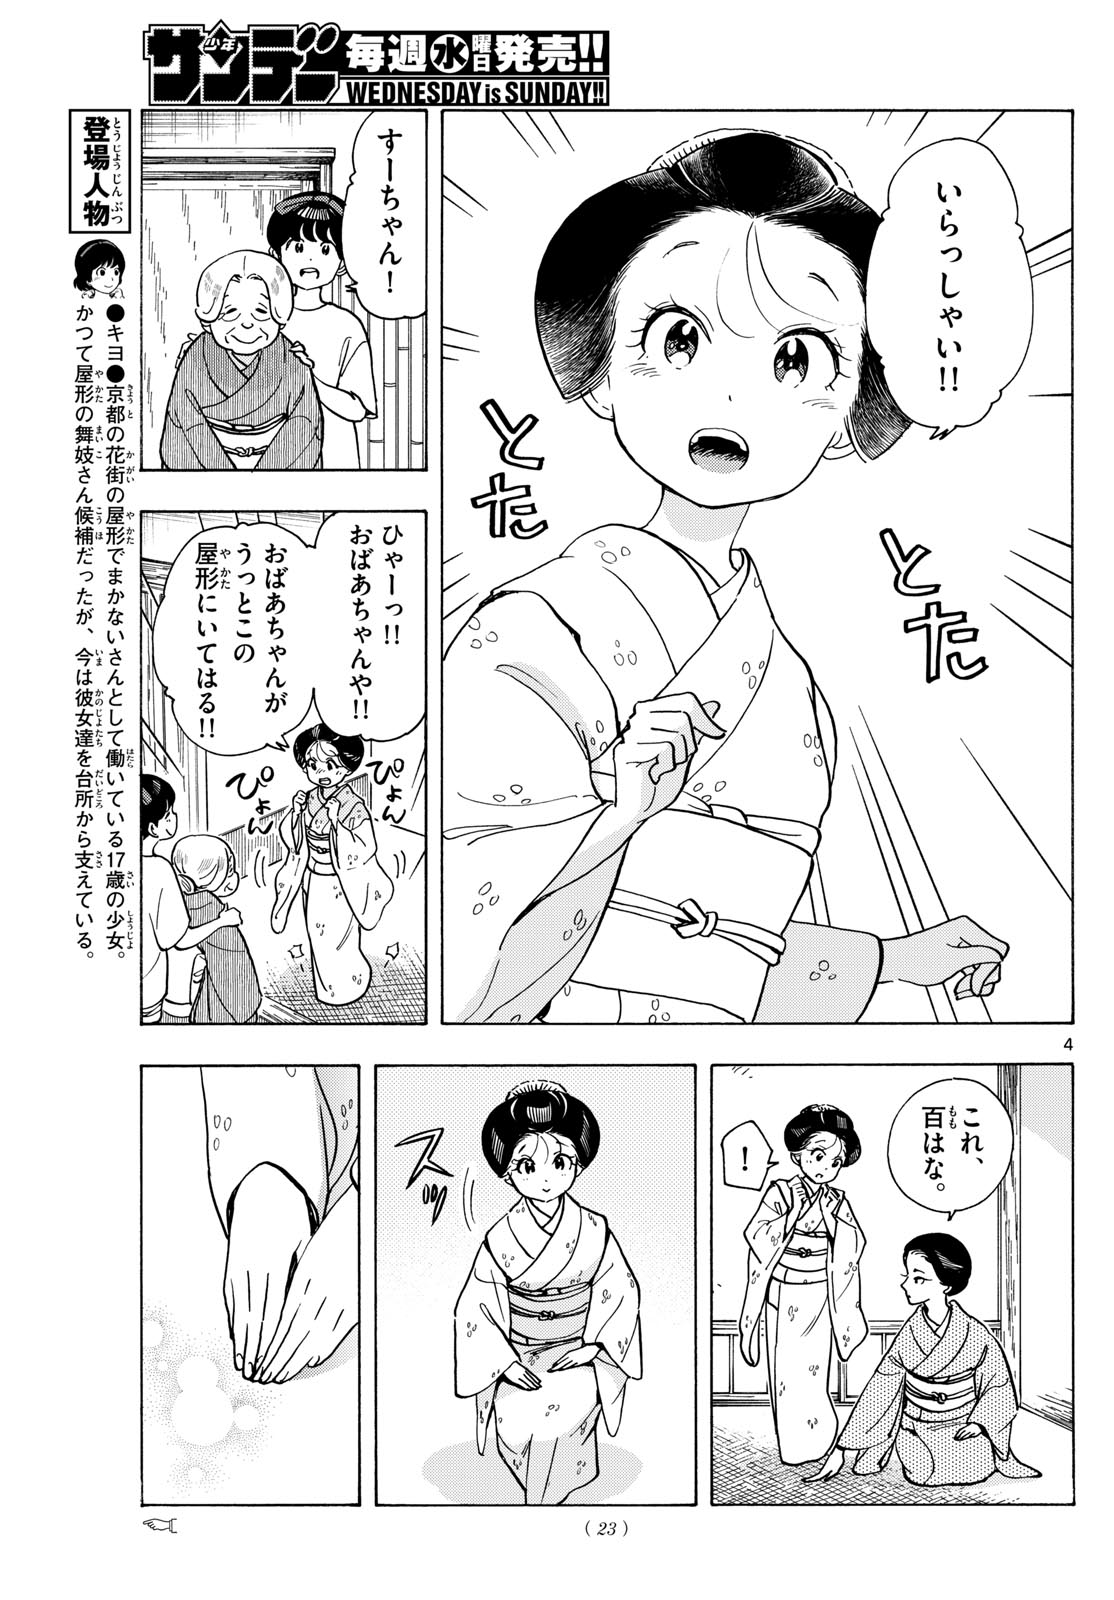 Maiko-san Chi no Makanai-san - Chapter 303 - Page 4